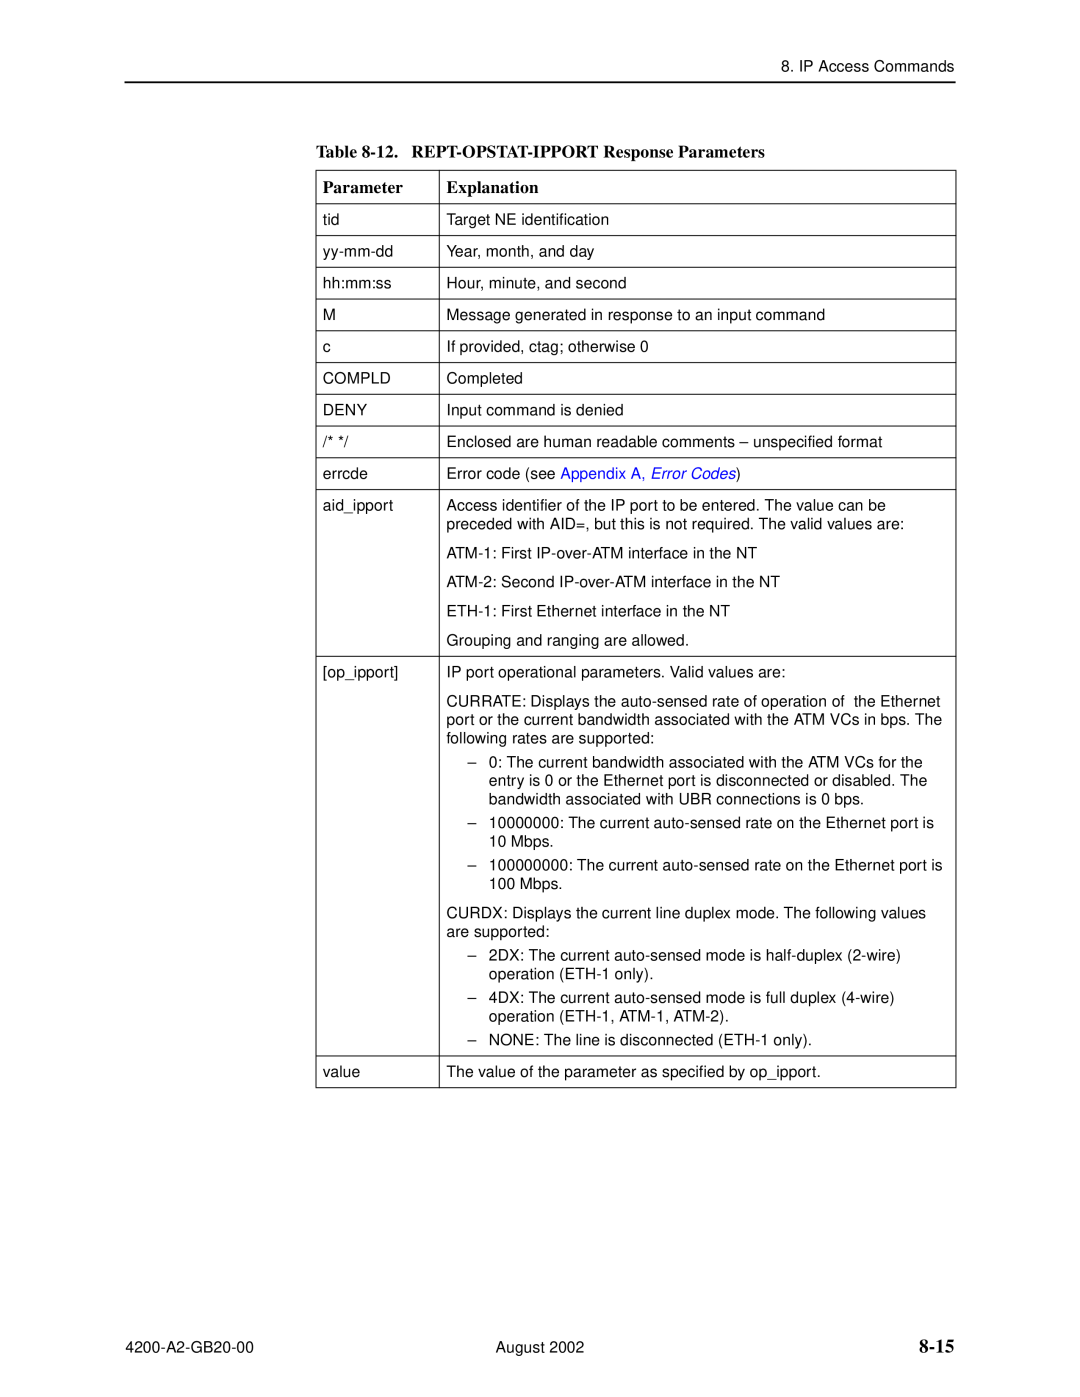 Paradyne 4200 manual 8-15, 12. REPT-OPSTAT-IPPORT Response Parameters, Explanation 